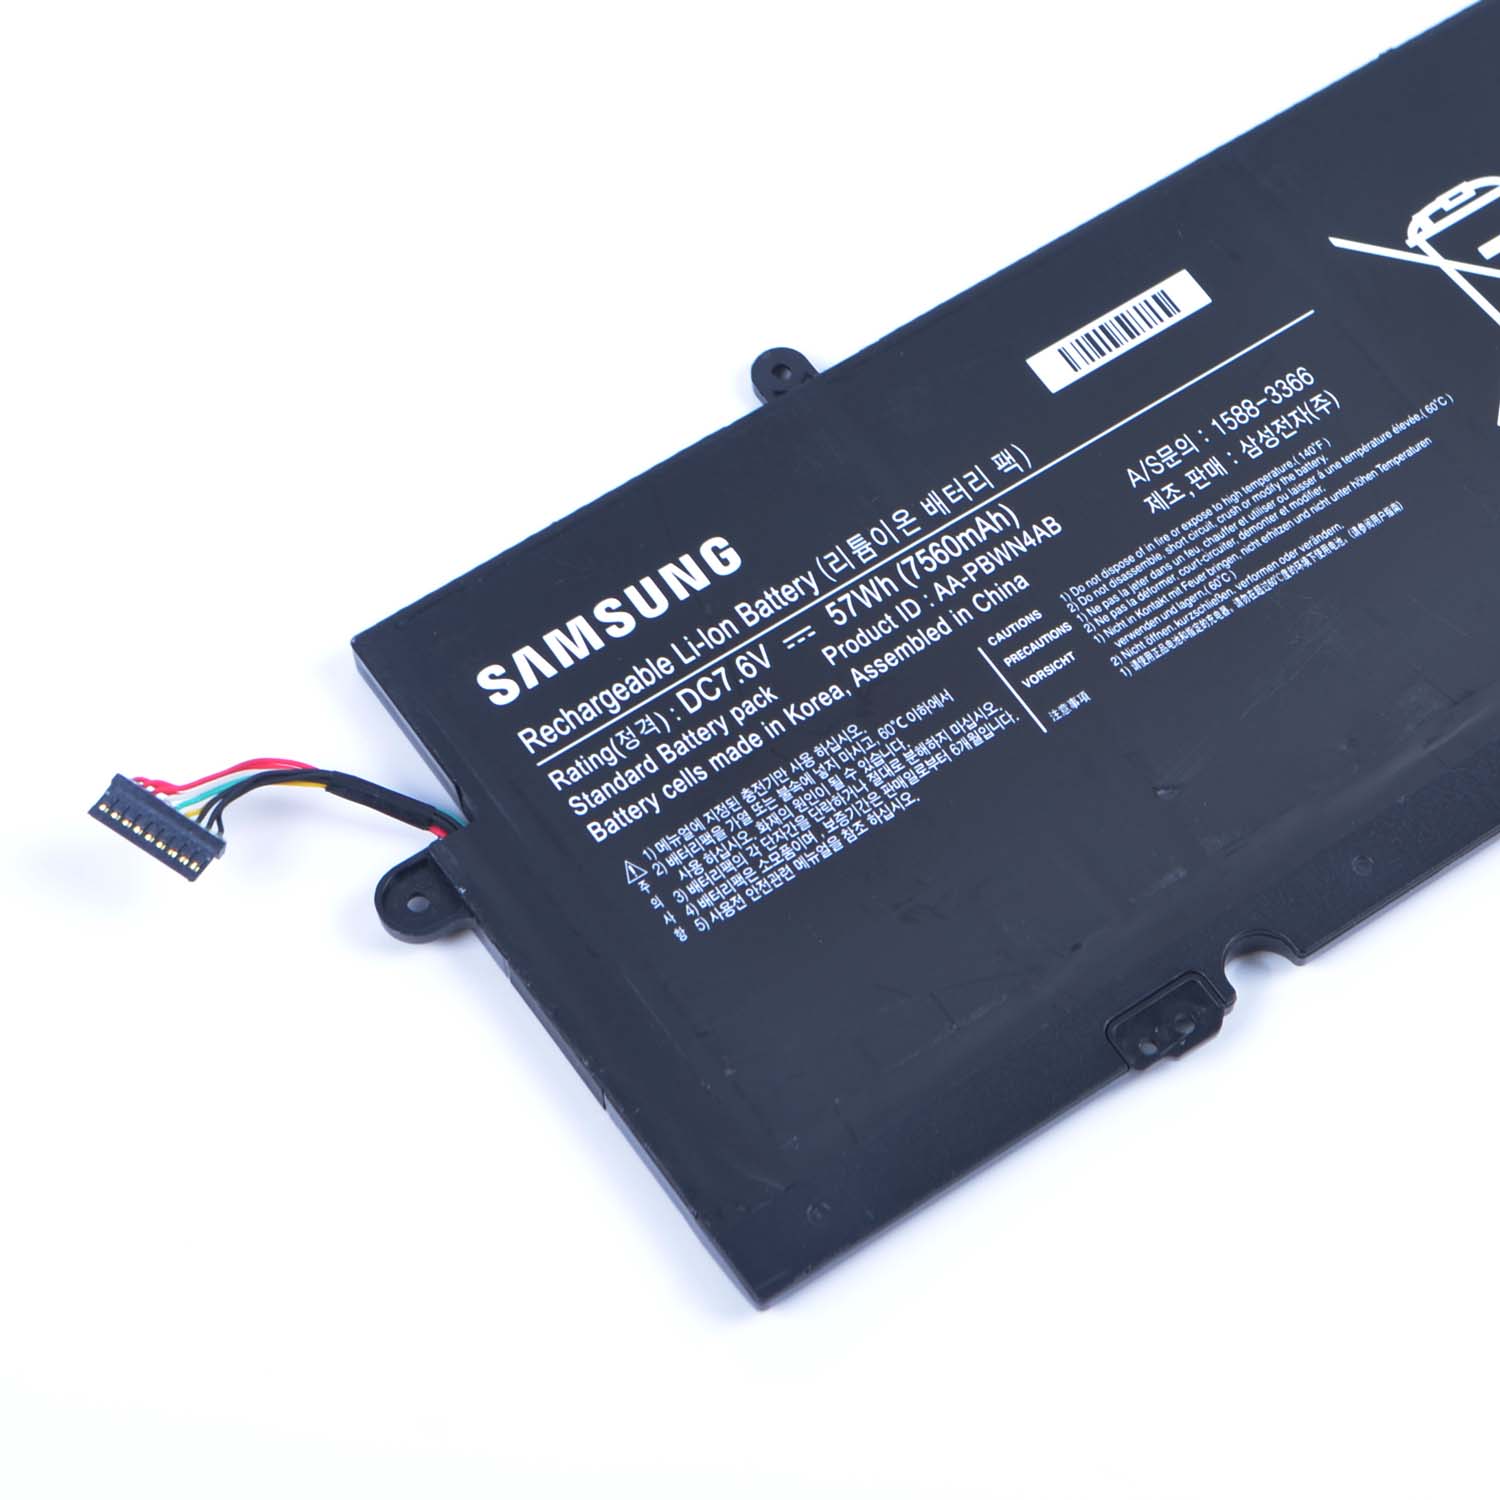 Samsung Samsung 730U3E-A01 battery